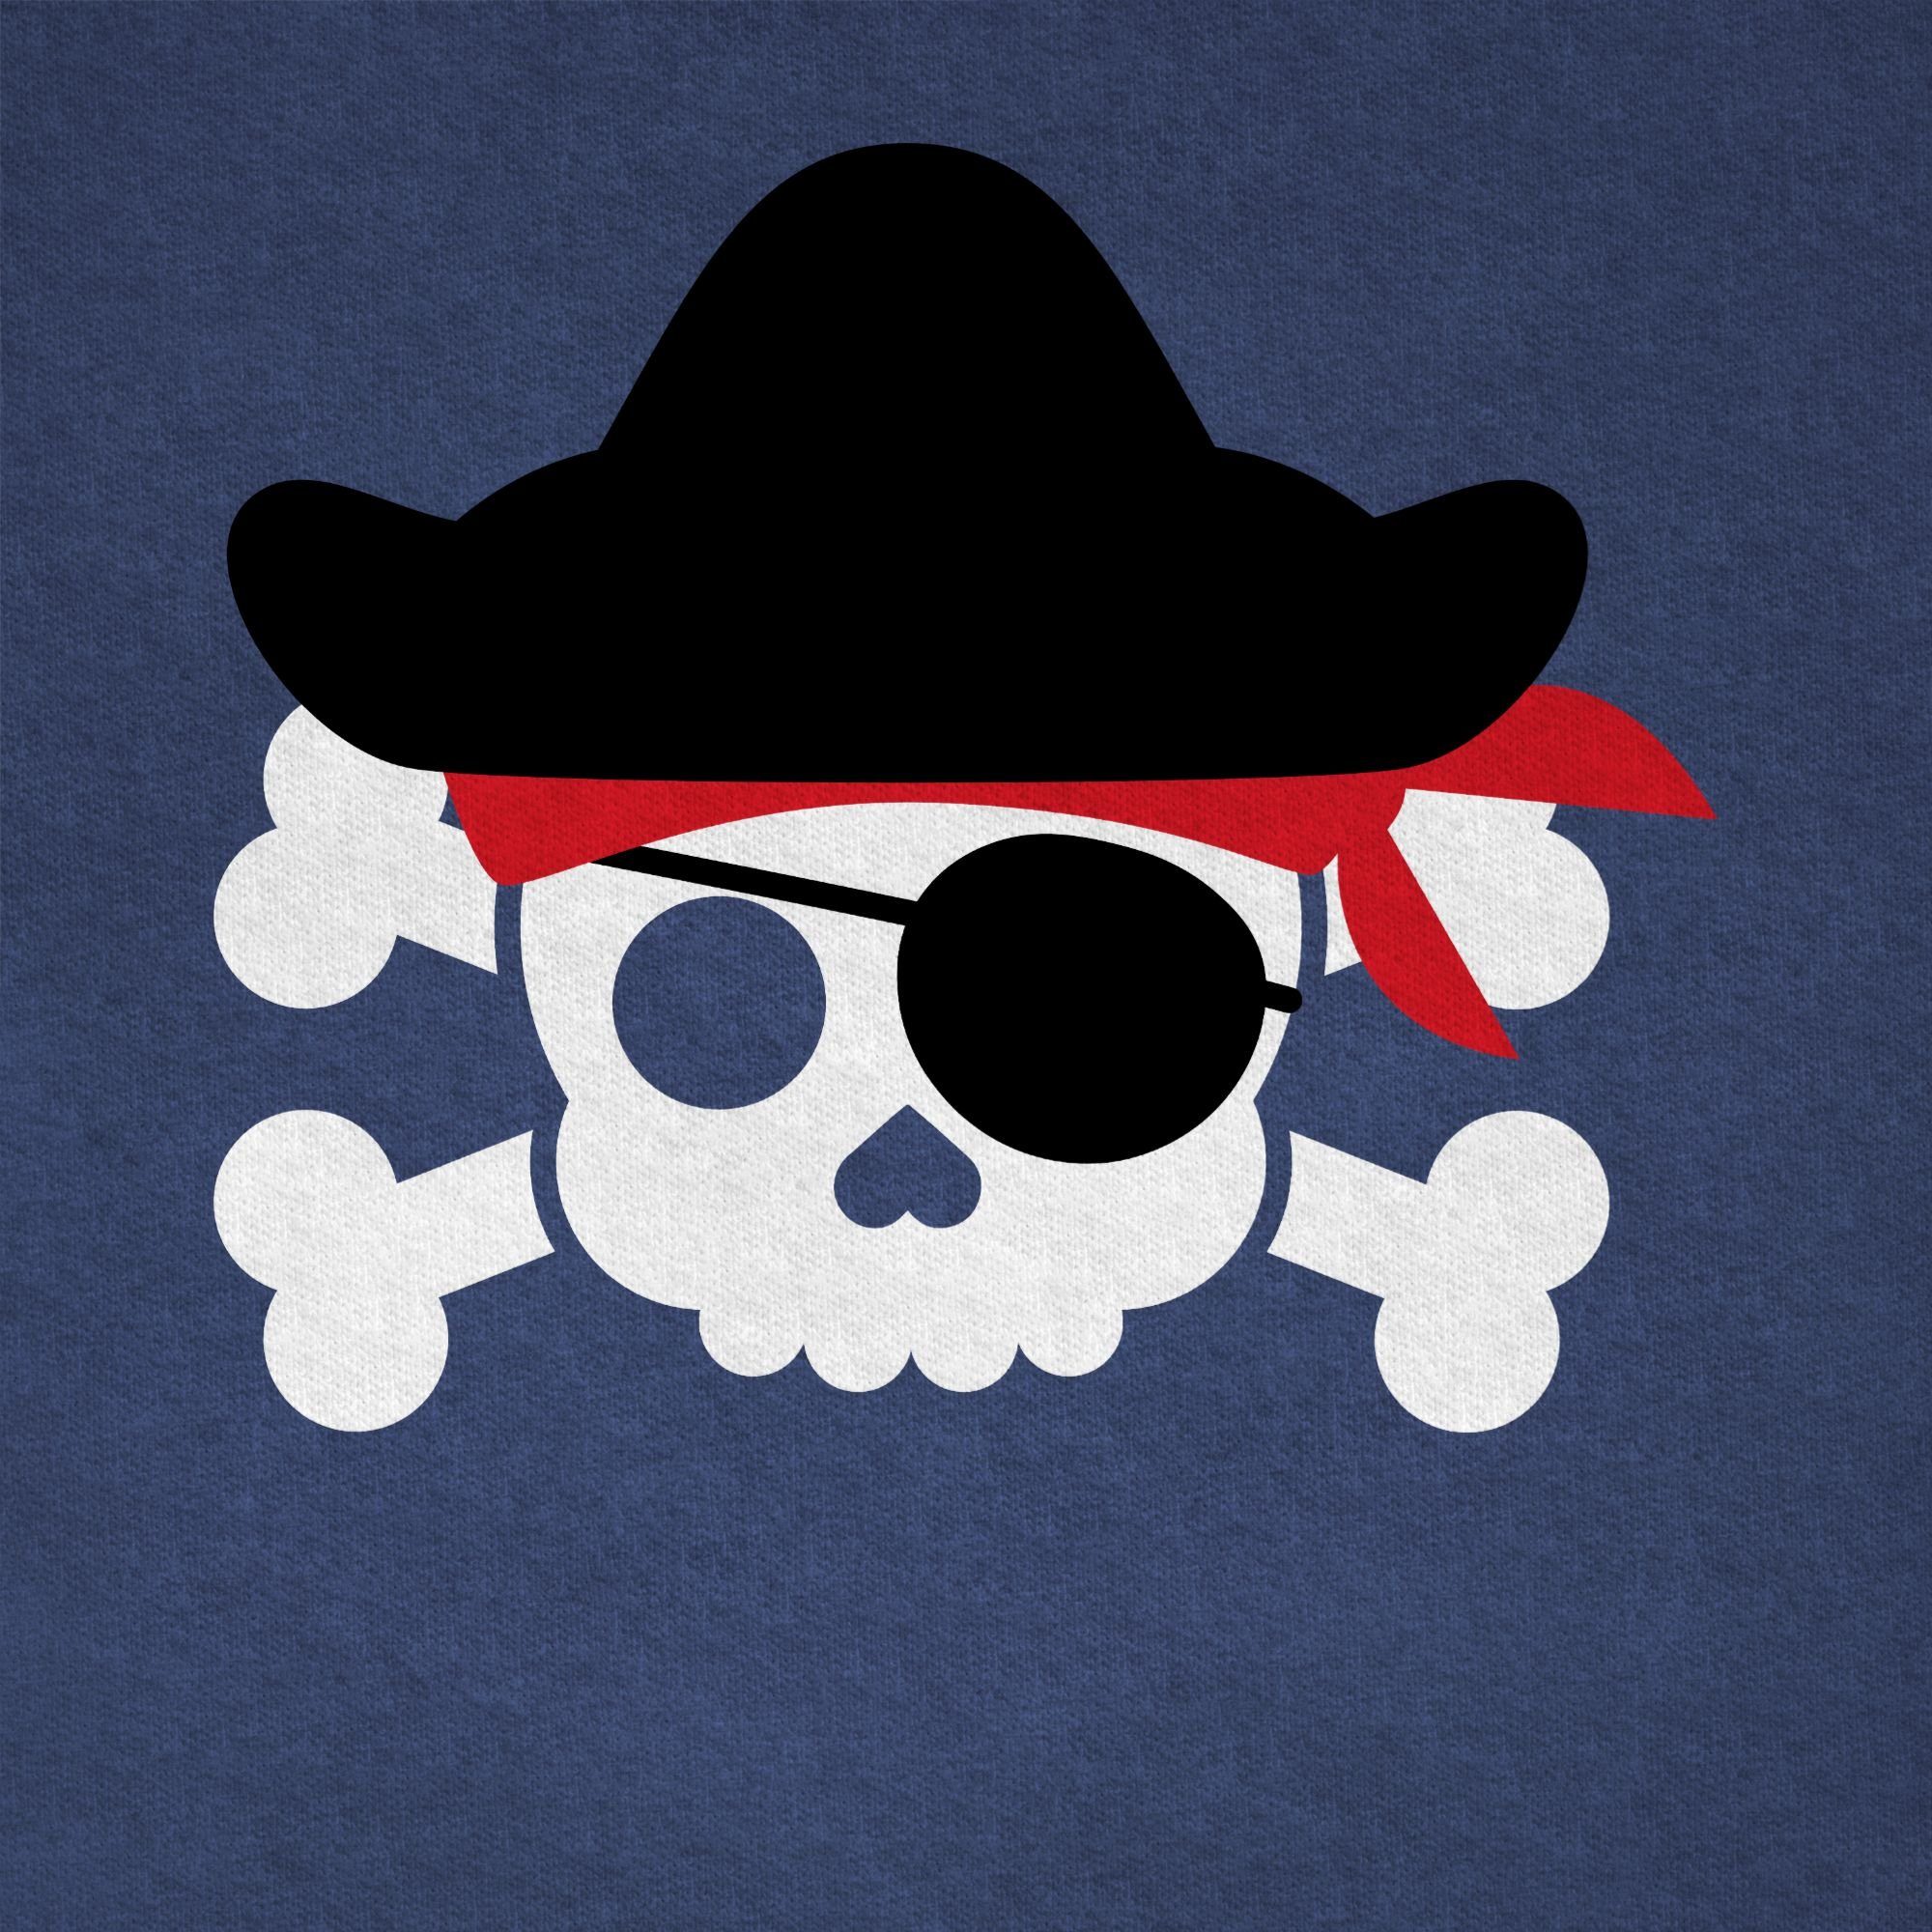 Shirtracer T-Shirt Piratenkopf Kostüm Karneval Totenkopf Dunkelblau Piraten & Geburtstags 3 Pirat Meliert Fasching Piratenkostüm 